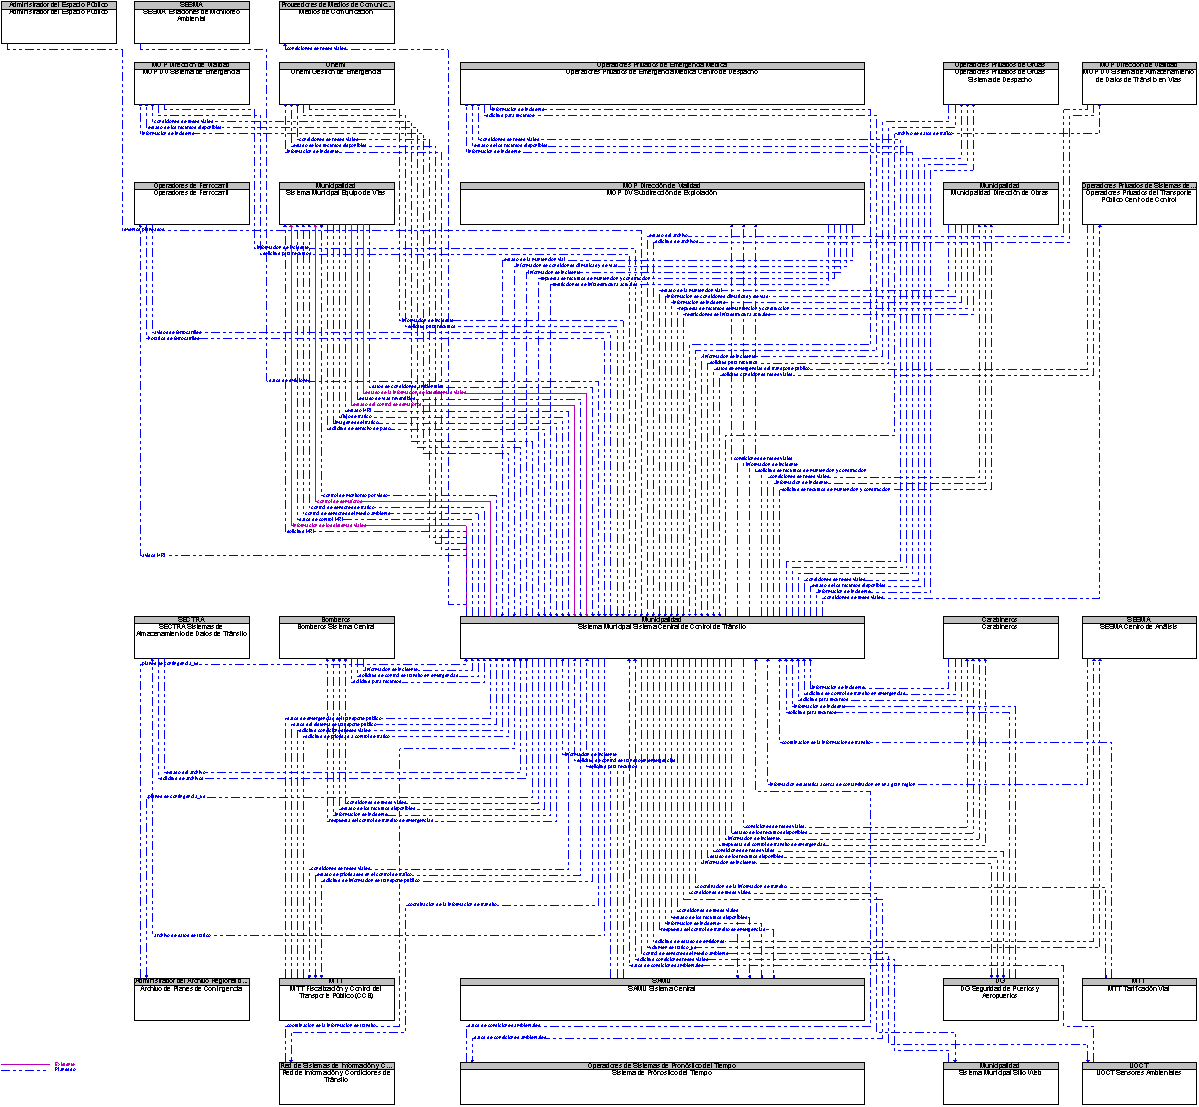 Diagrama Del Contexto por Sistema Municipal Sistema Central de Control de Trnsito